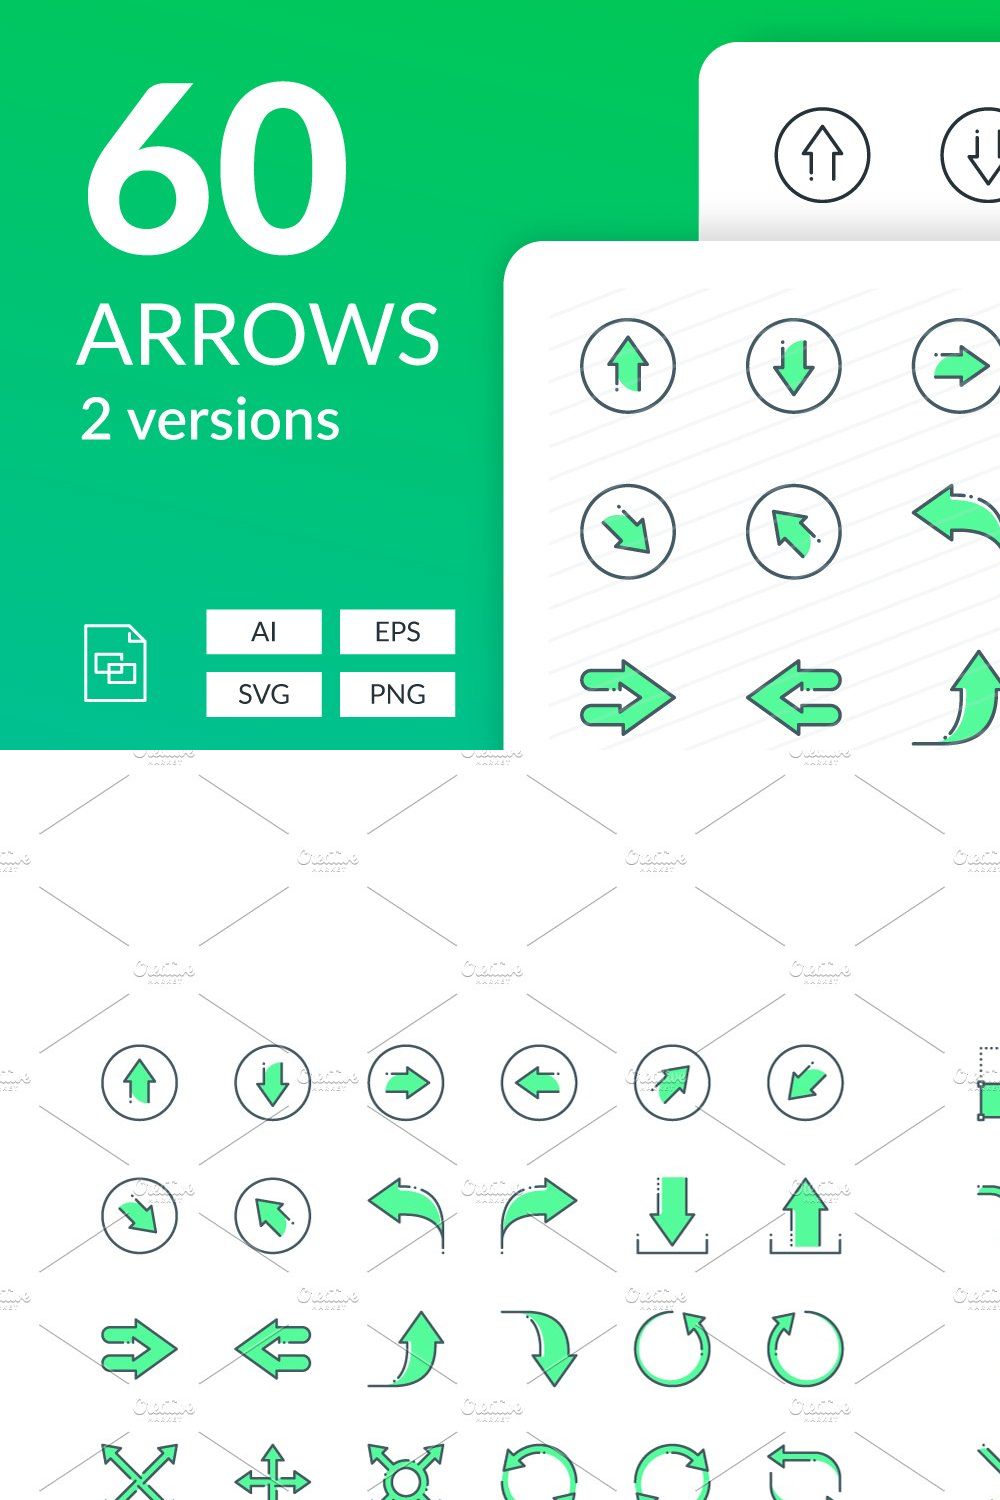 Arrows pinterest preview image.